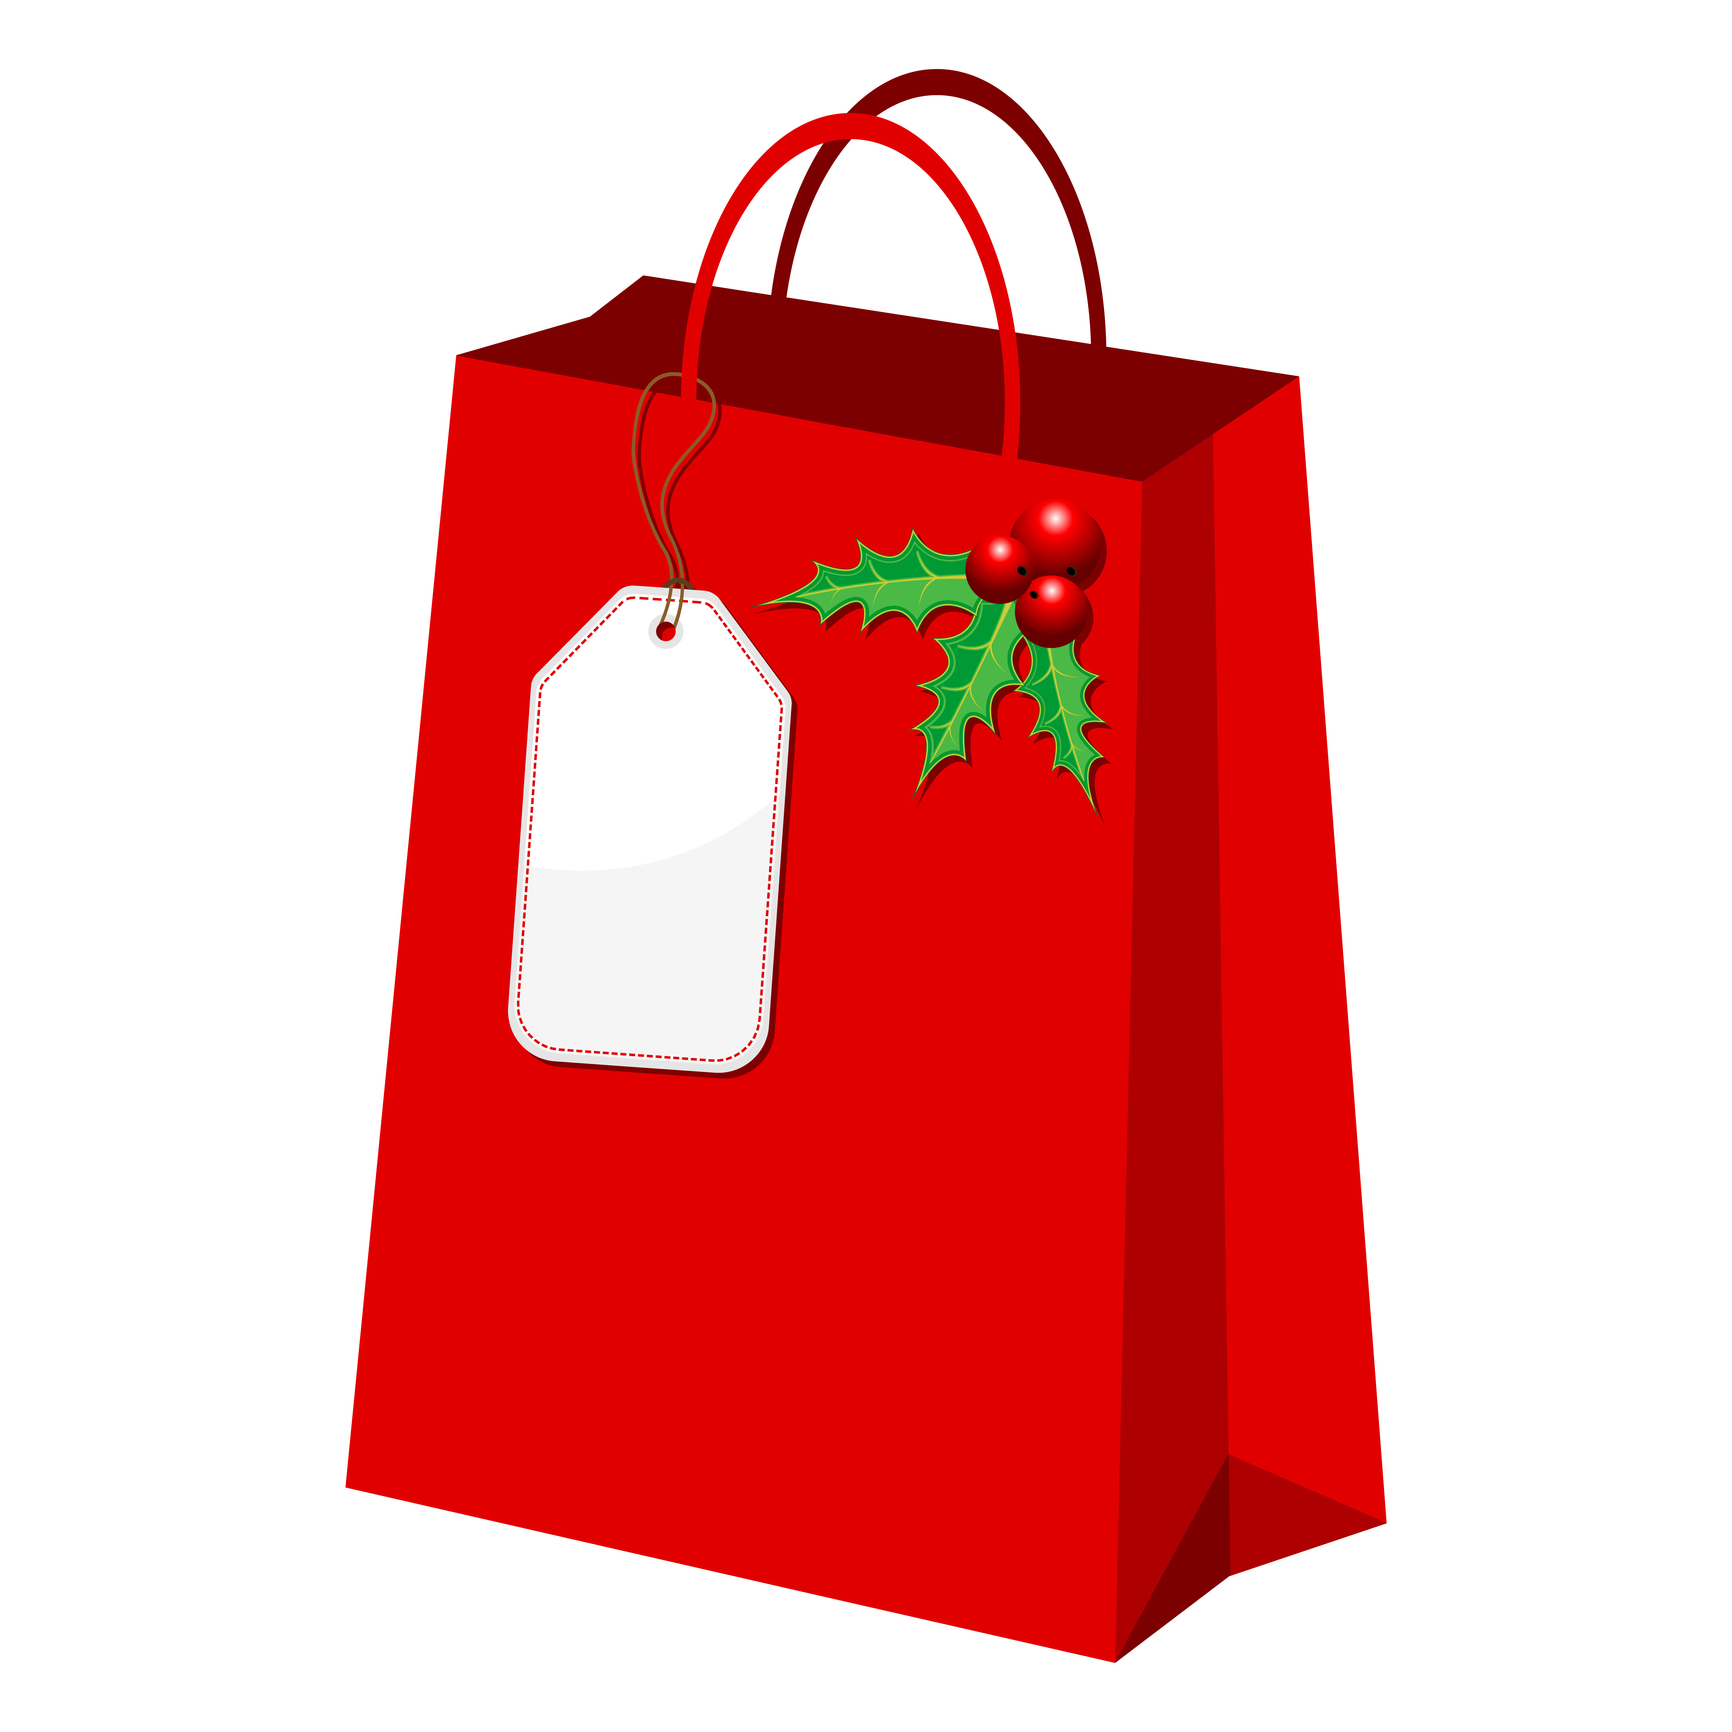 Christmas shopping bag clipart